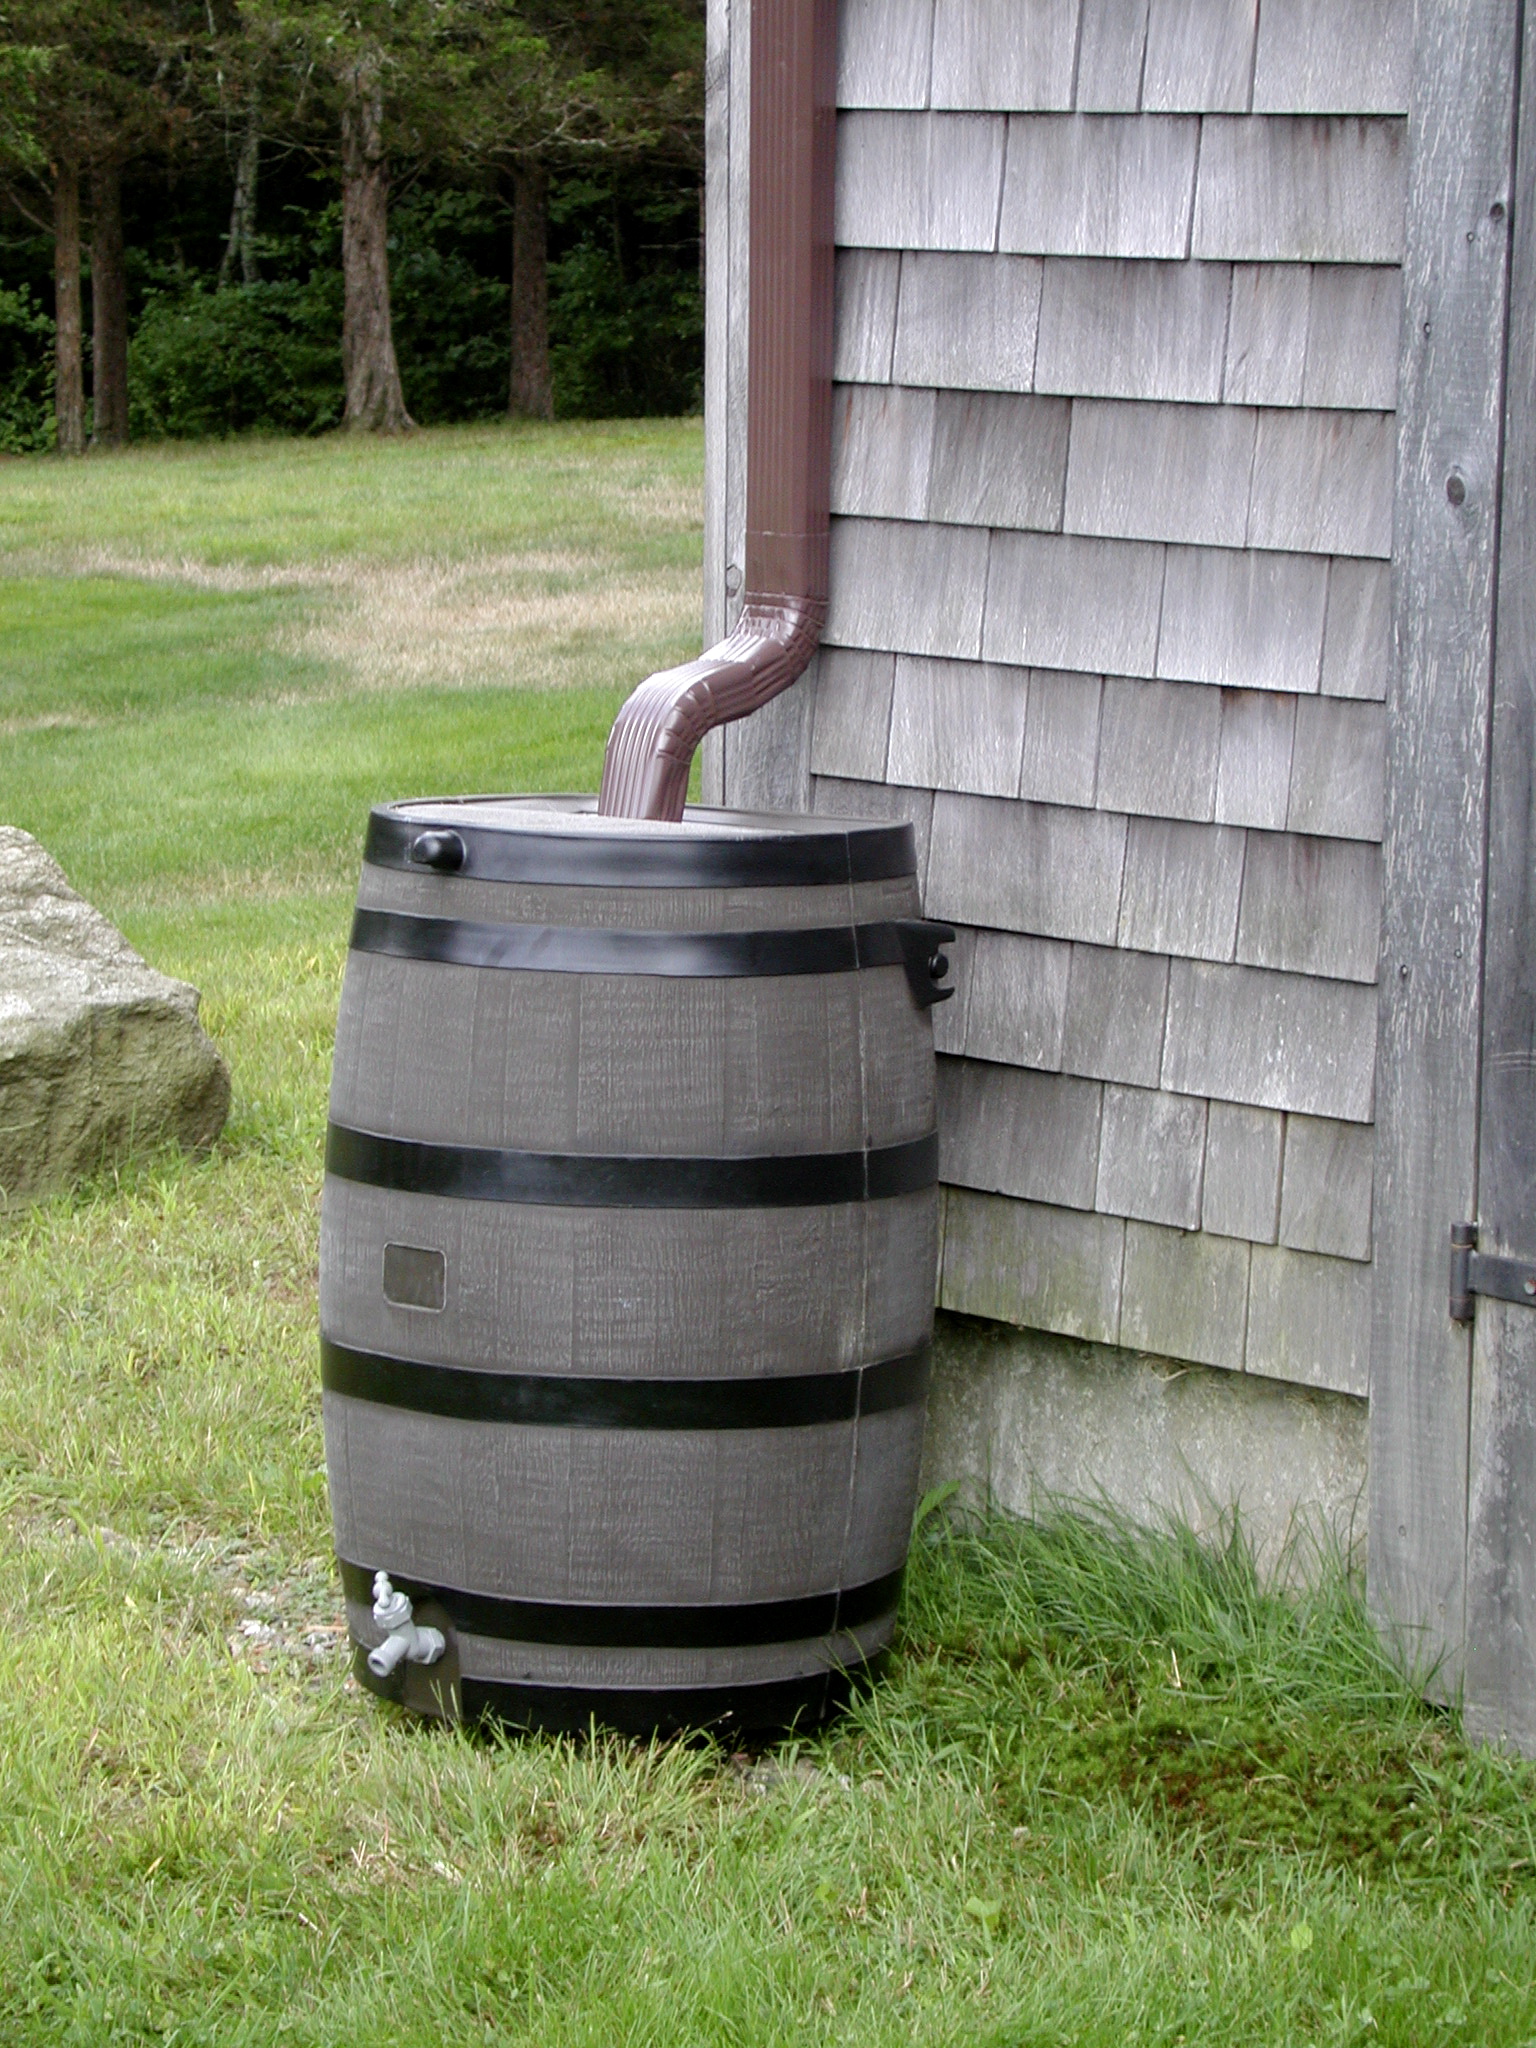 rain barrel water gutters runoff rainwater downspouts cisterns barrels diy fashioned wood gutter garden downspout protection woodgrain catch grid tank